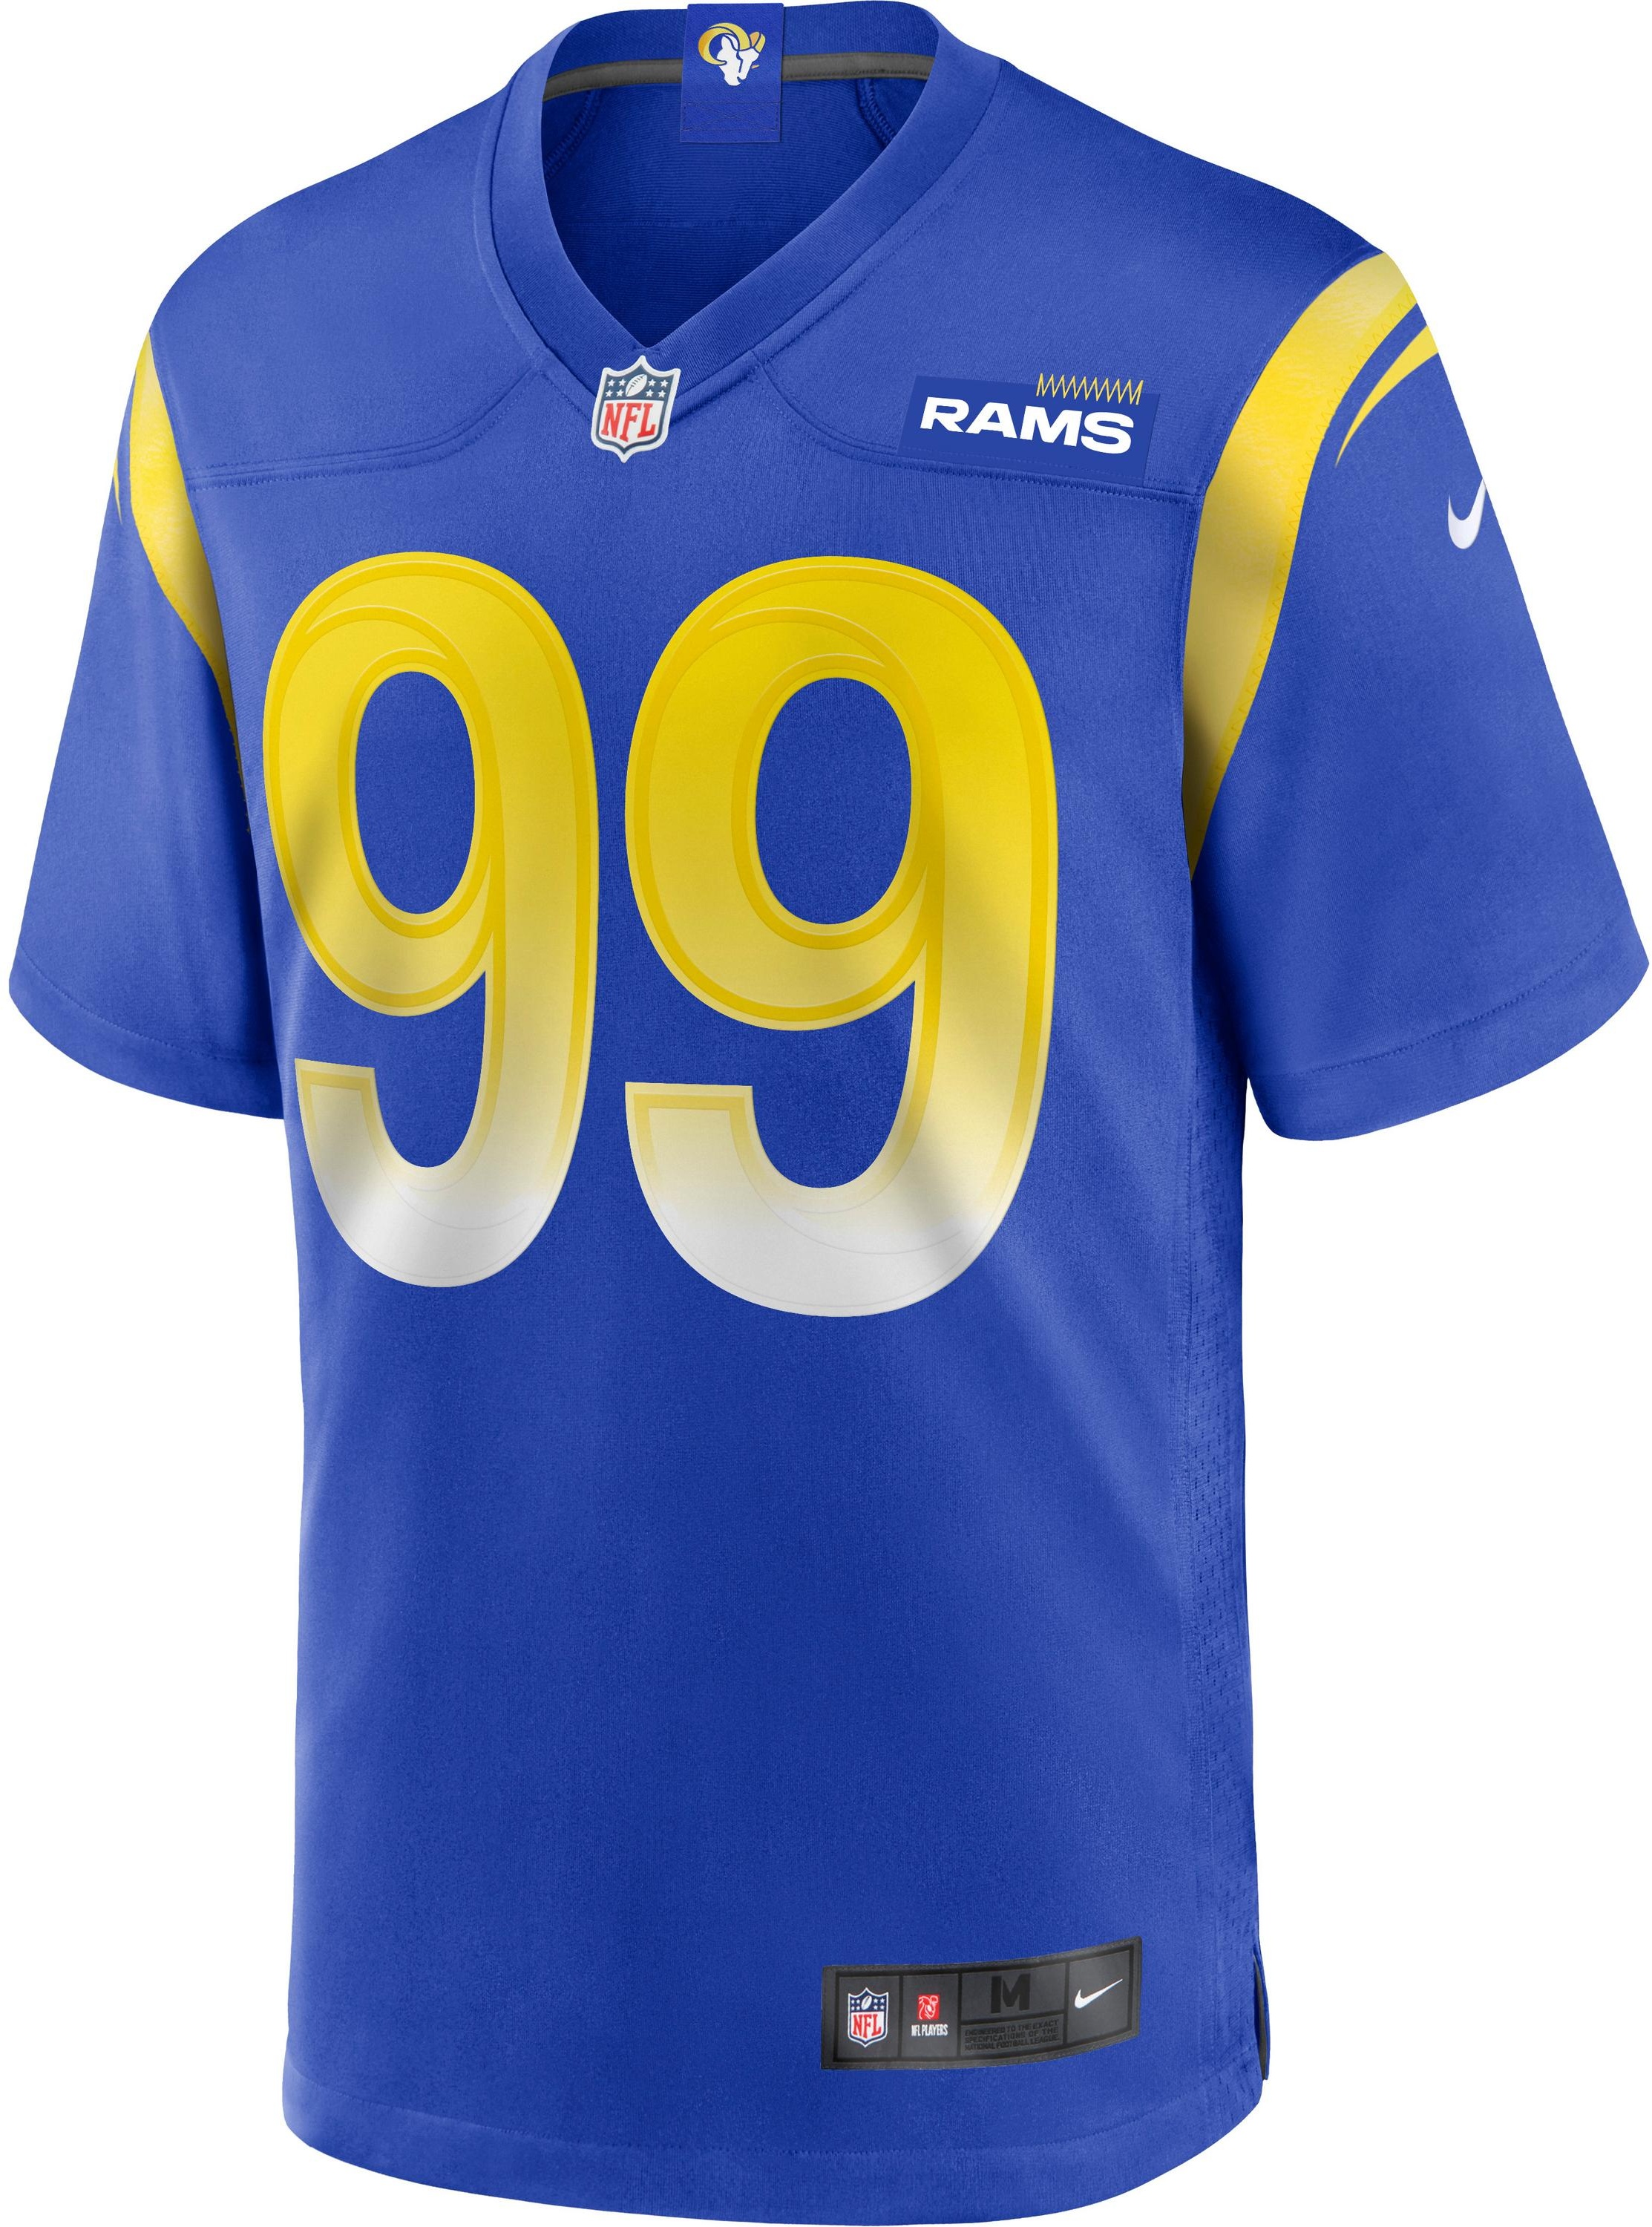 Nike Los Angeles Rams Aaron Donald 99 Spielertrikot Herren in hyper royal - aaron donald, Größe L - blau